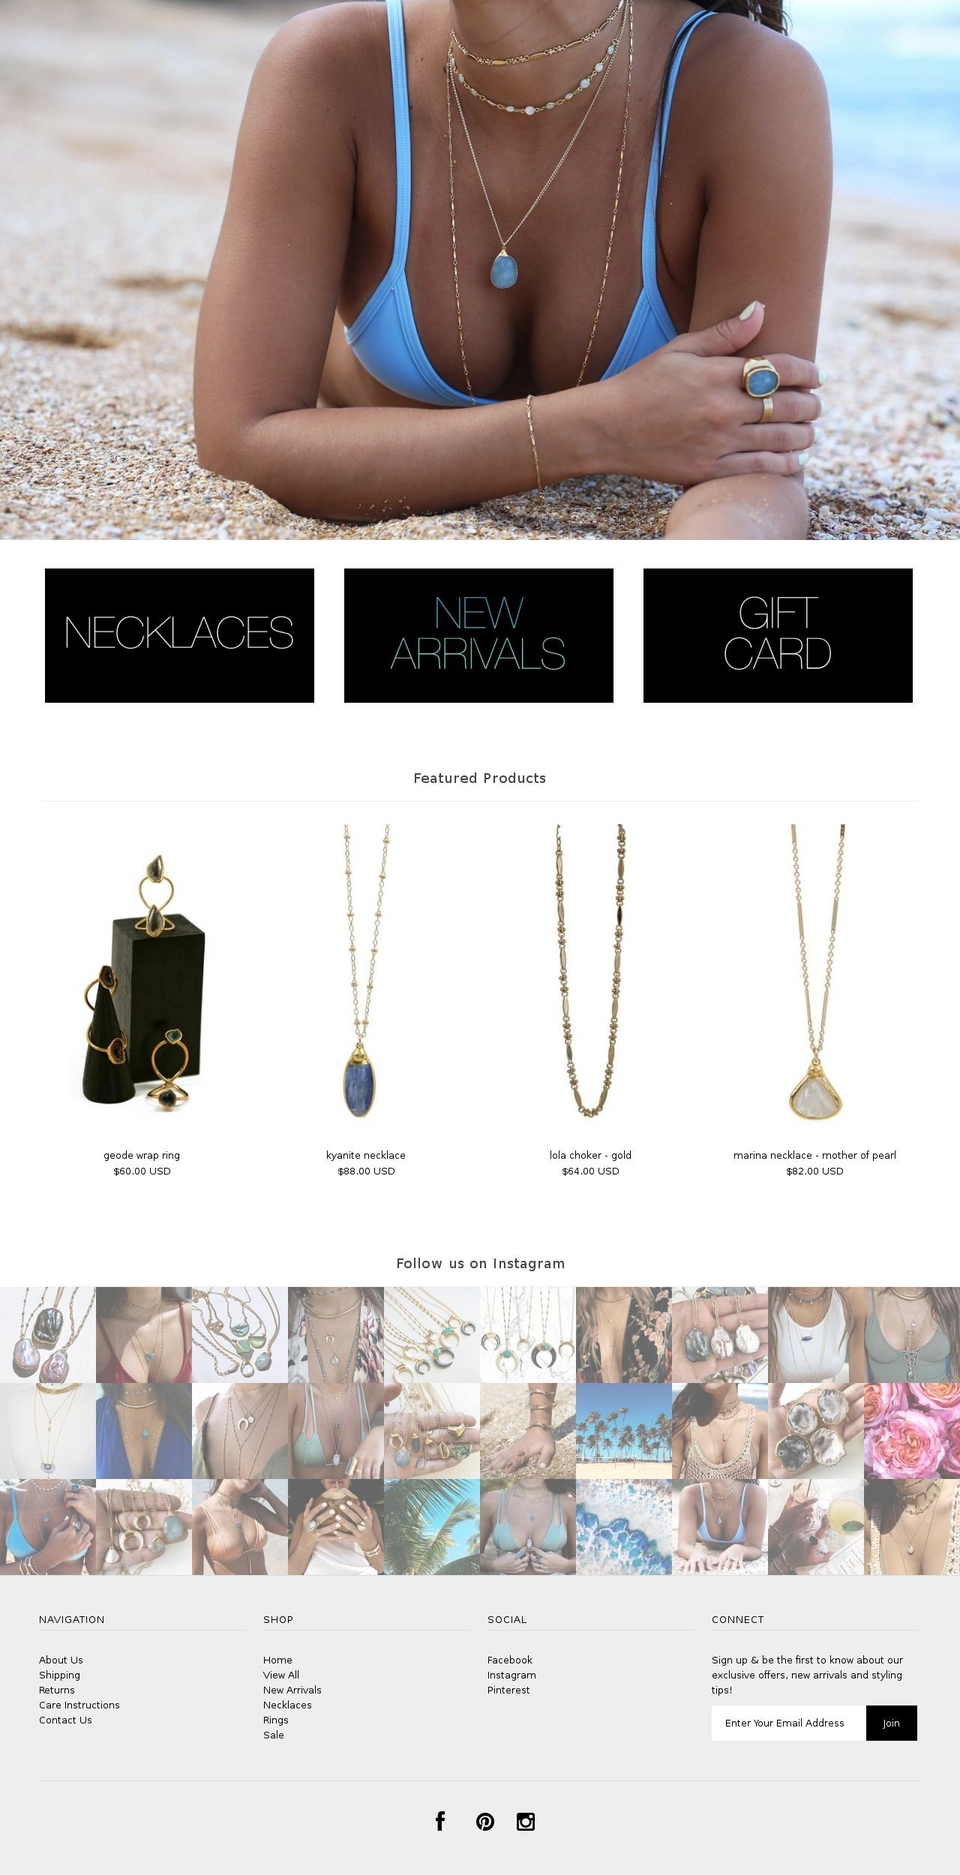 keijewelry.com shopify website screenshot